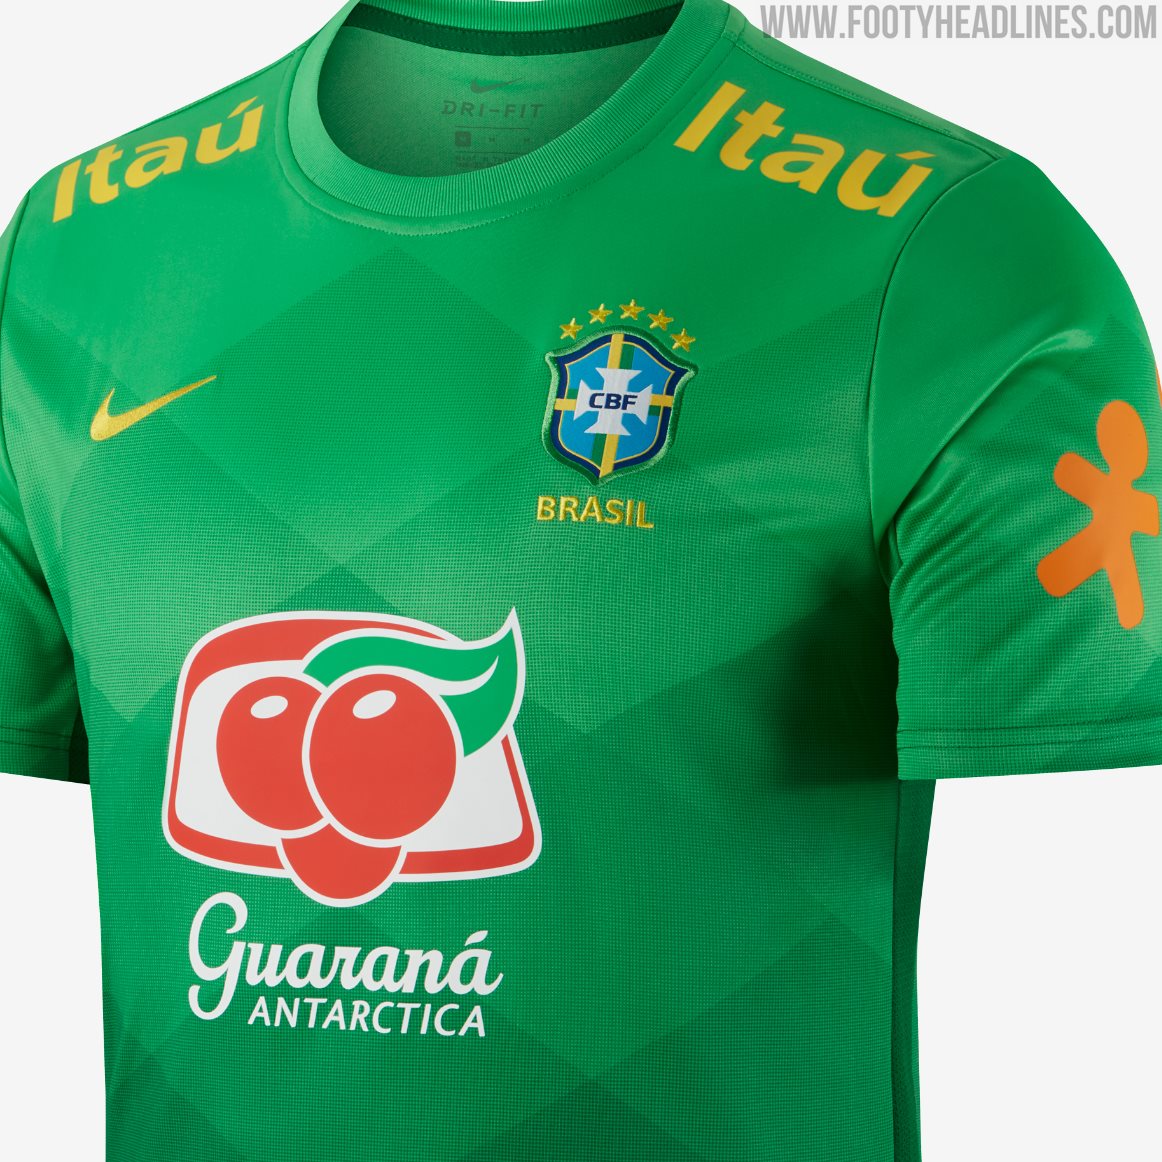 Brazil 2020 Pre-Match Shirt Released - Footy Headlines